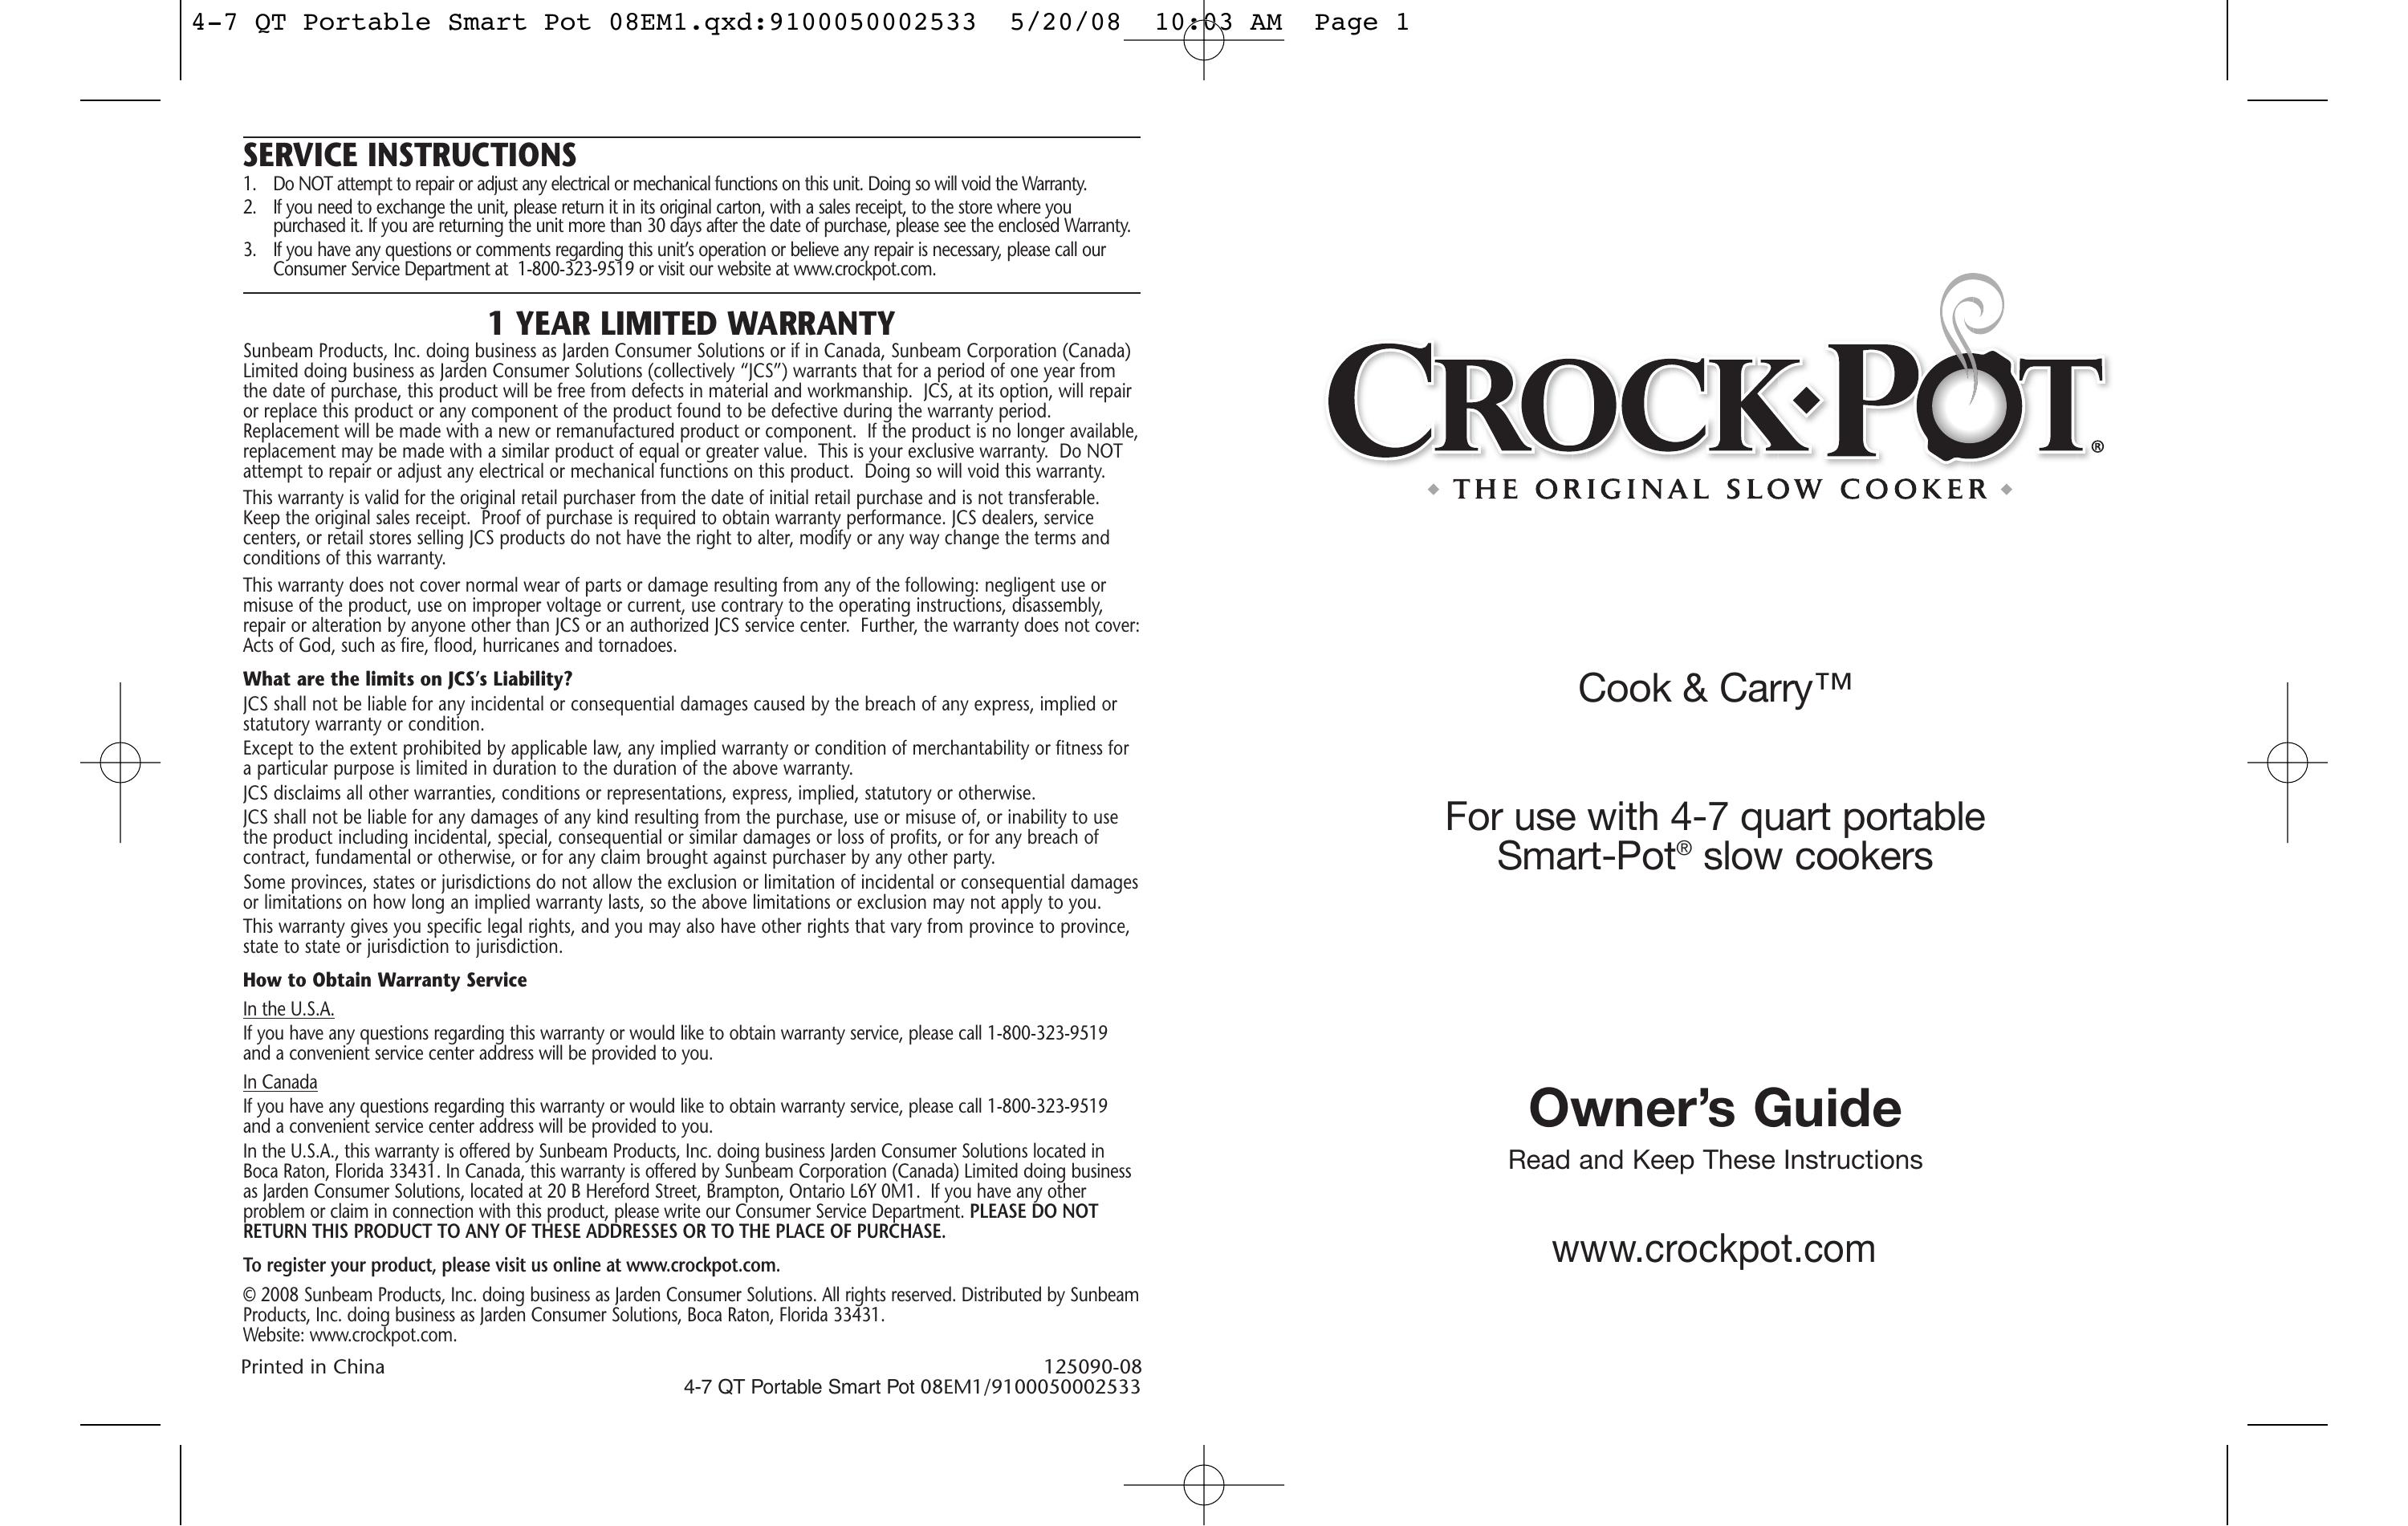 Crock-Pot Cook & Carry 4-7 Quart Slow Cooker User Manual